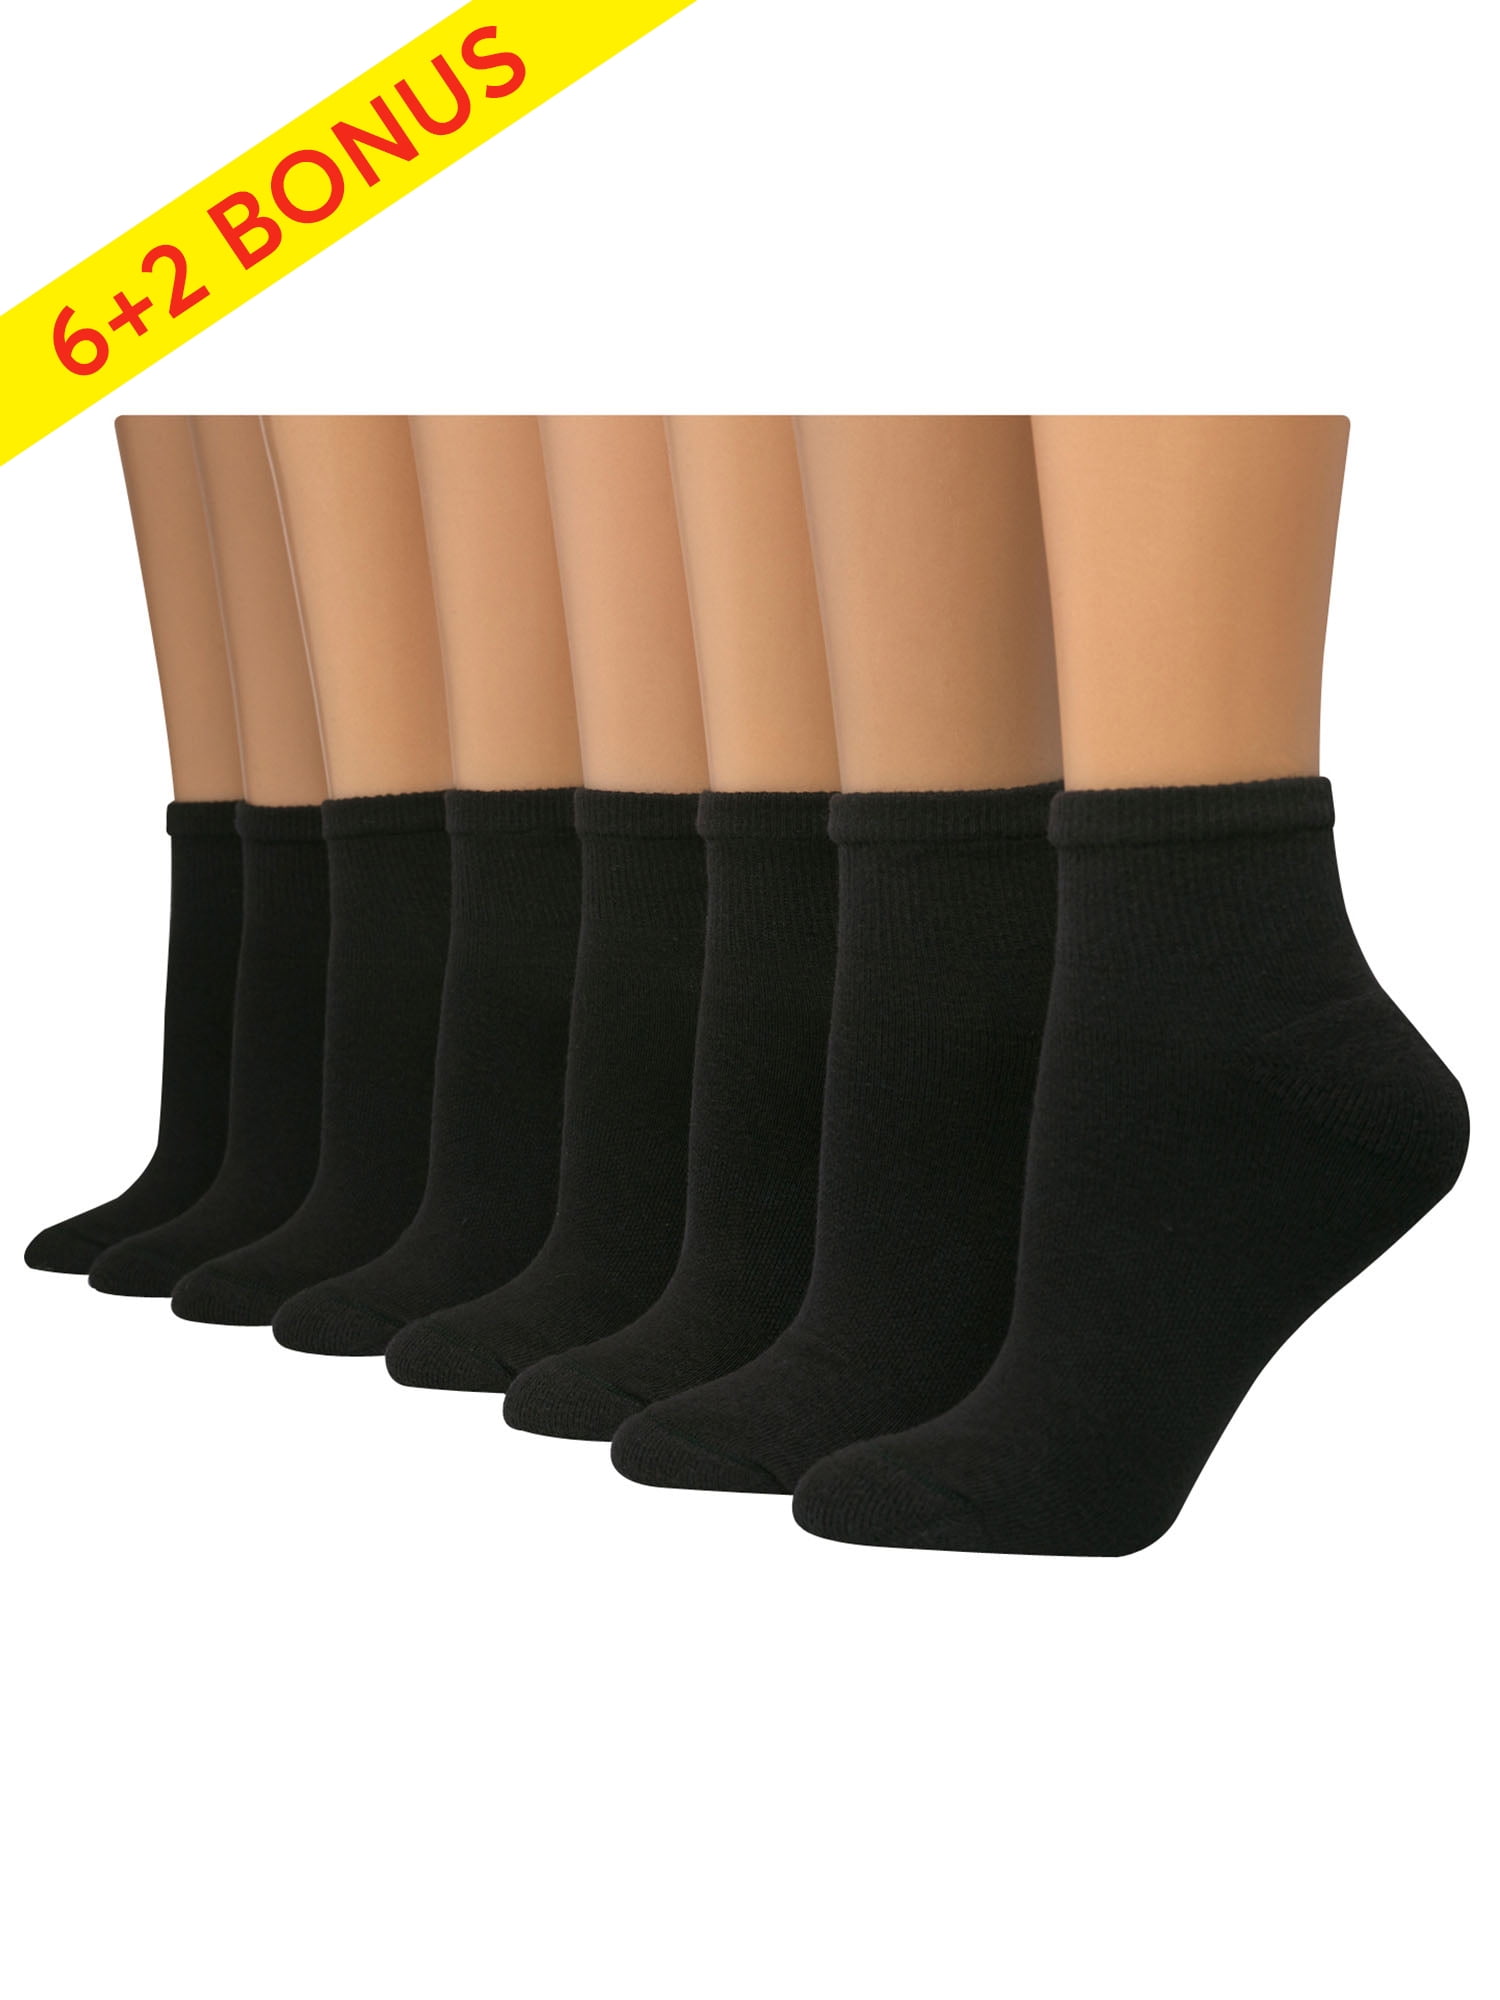 Hanes Womens' Sport Cool Comfort Ankle Socks, 6+2 bonus pack - Walmart.com